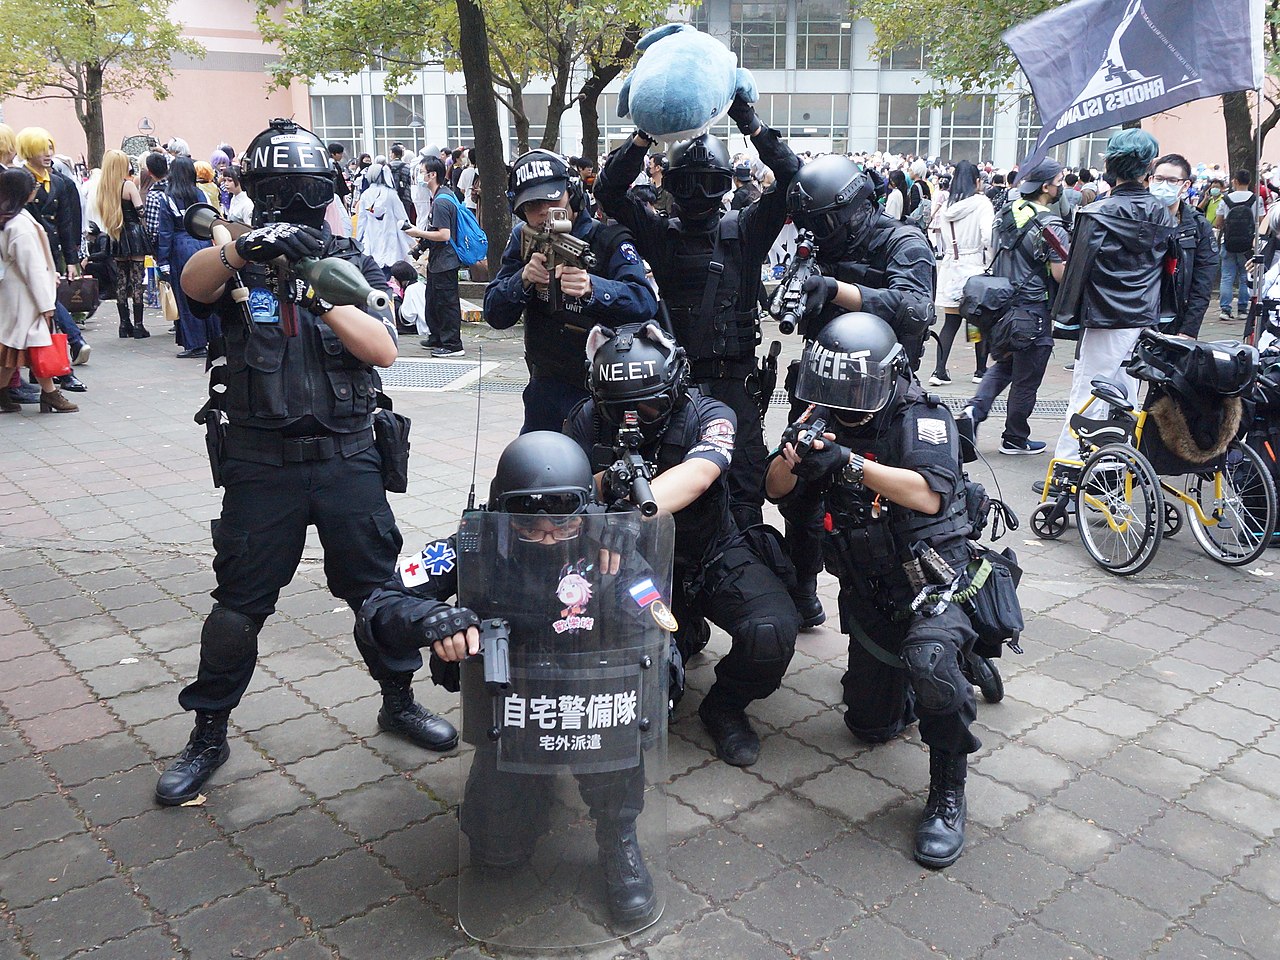 riot shield - Wikidata